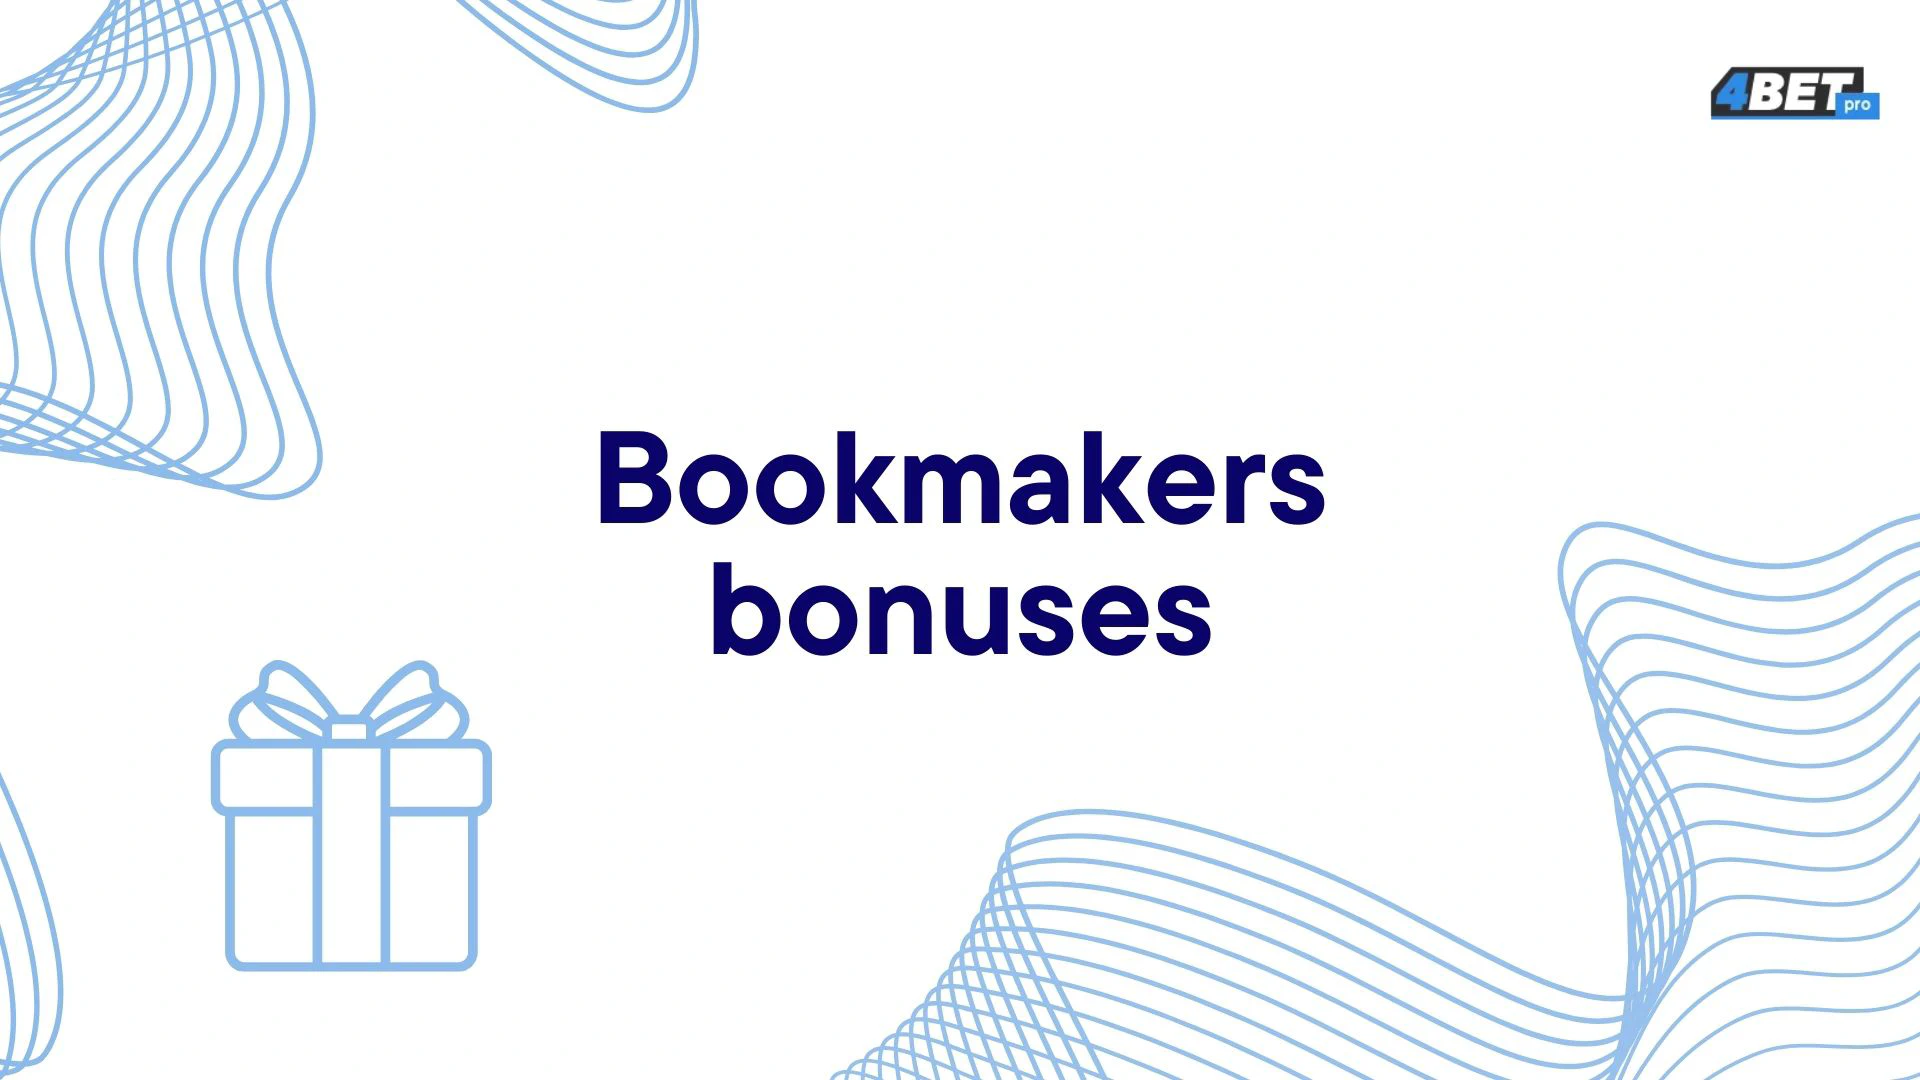 New bookmaker bonuses